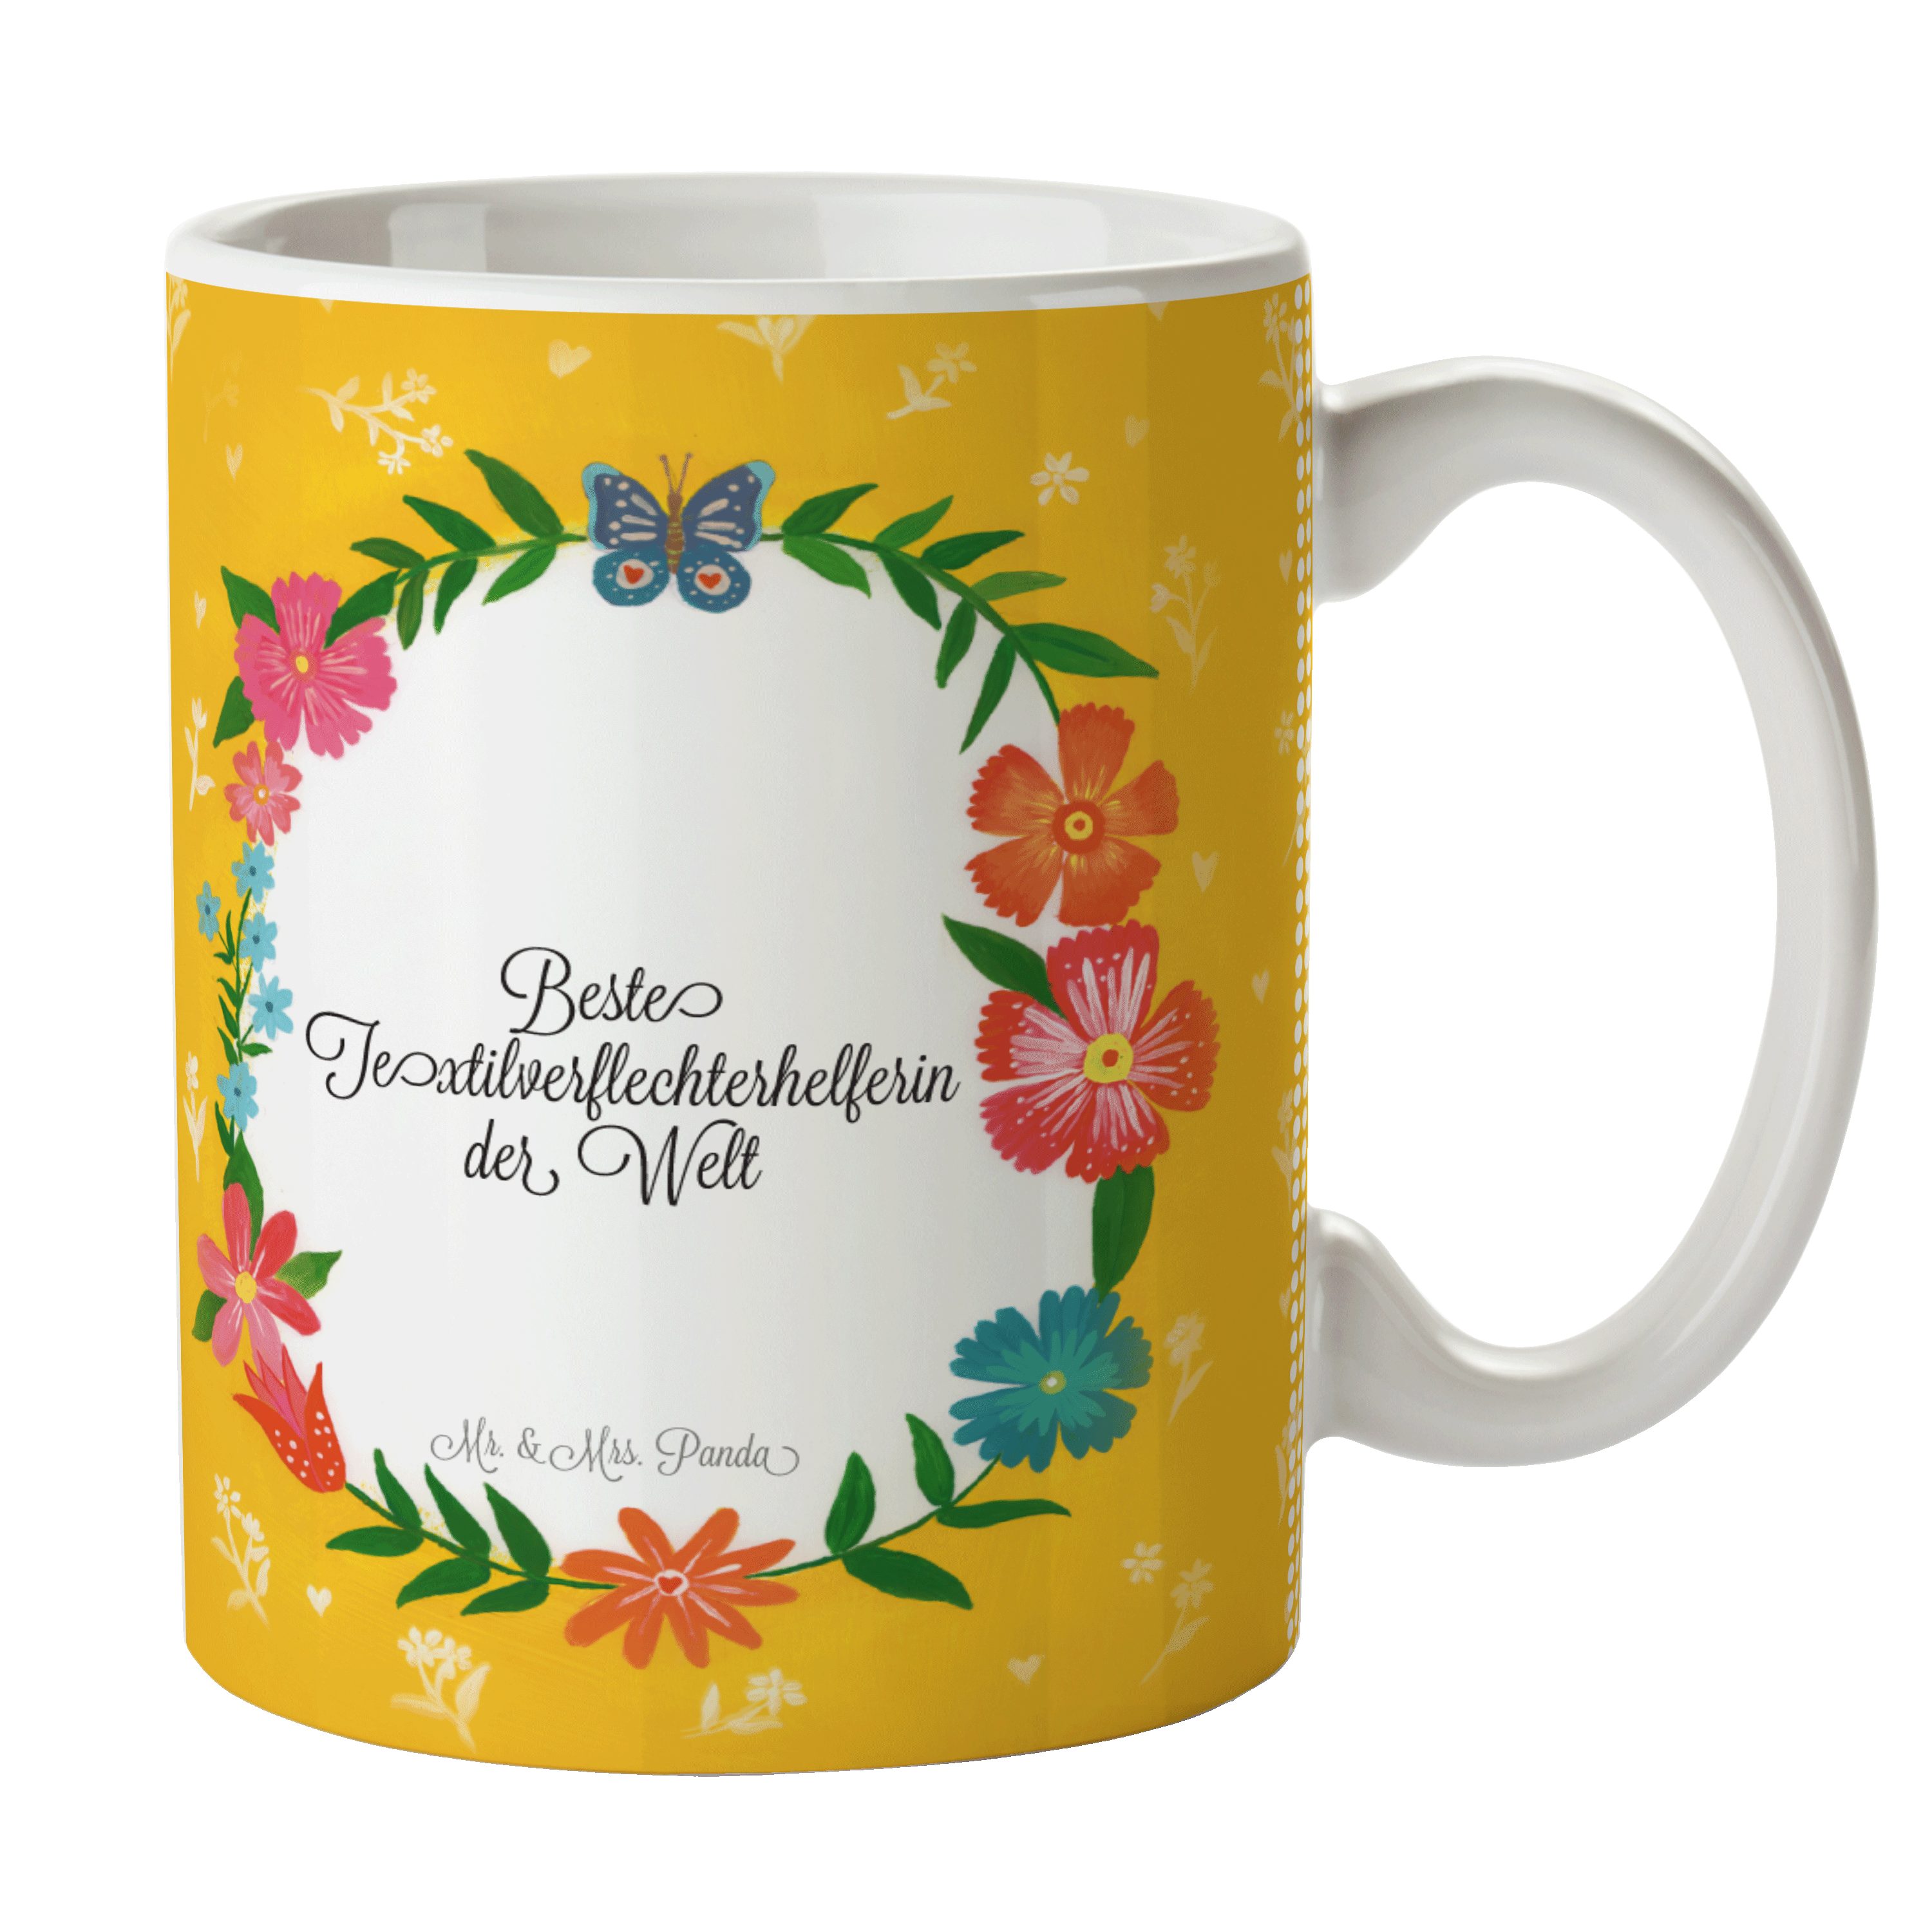 Verkauf zum niedrigsten Preis! Mr. & Mrs. Panda Berufsschule, - Geschenk, Textilverflechterhelferin Tasse Keramik Kaffeetasse, Beru